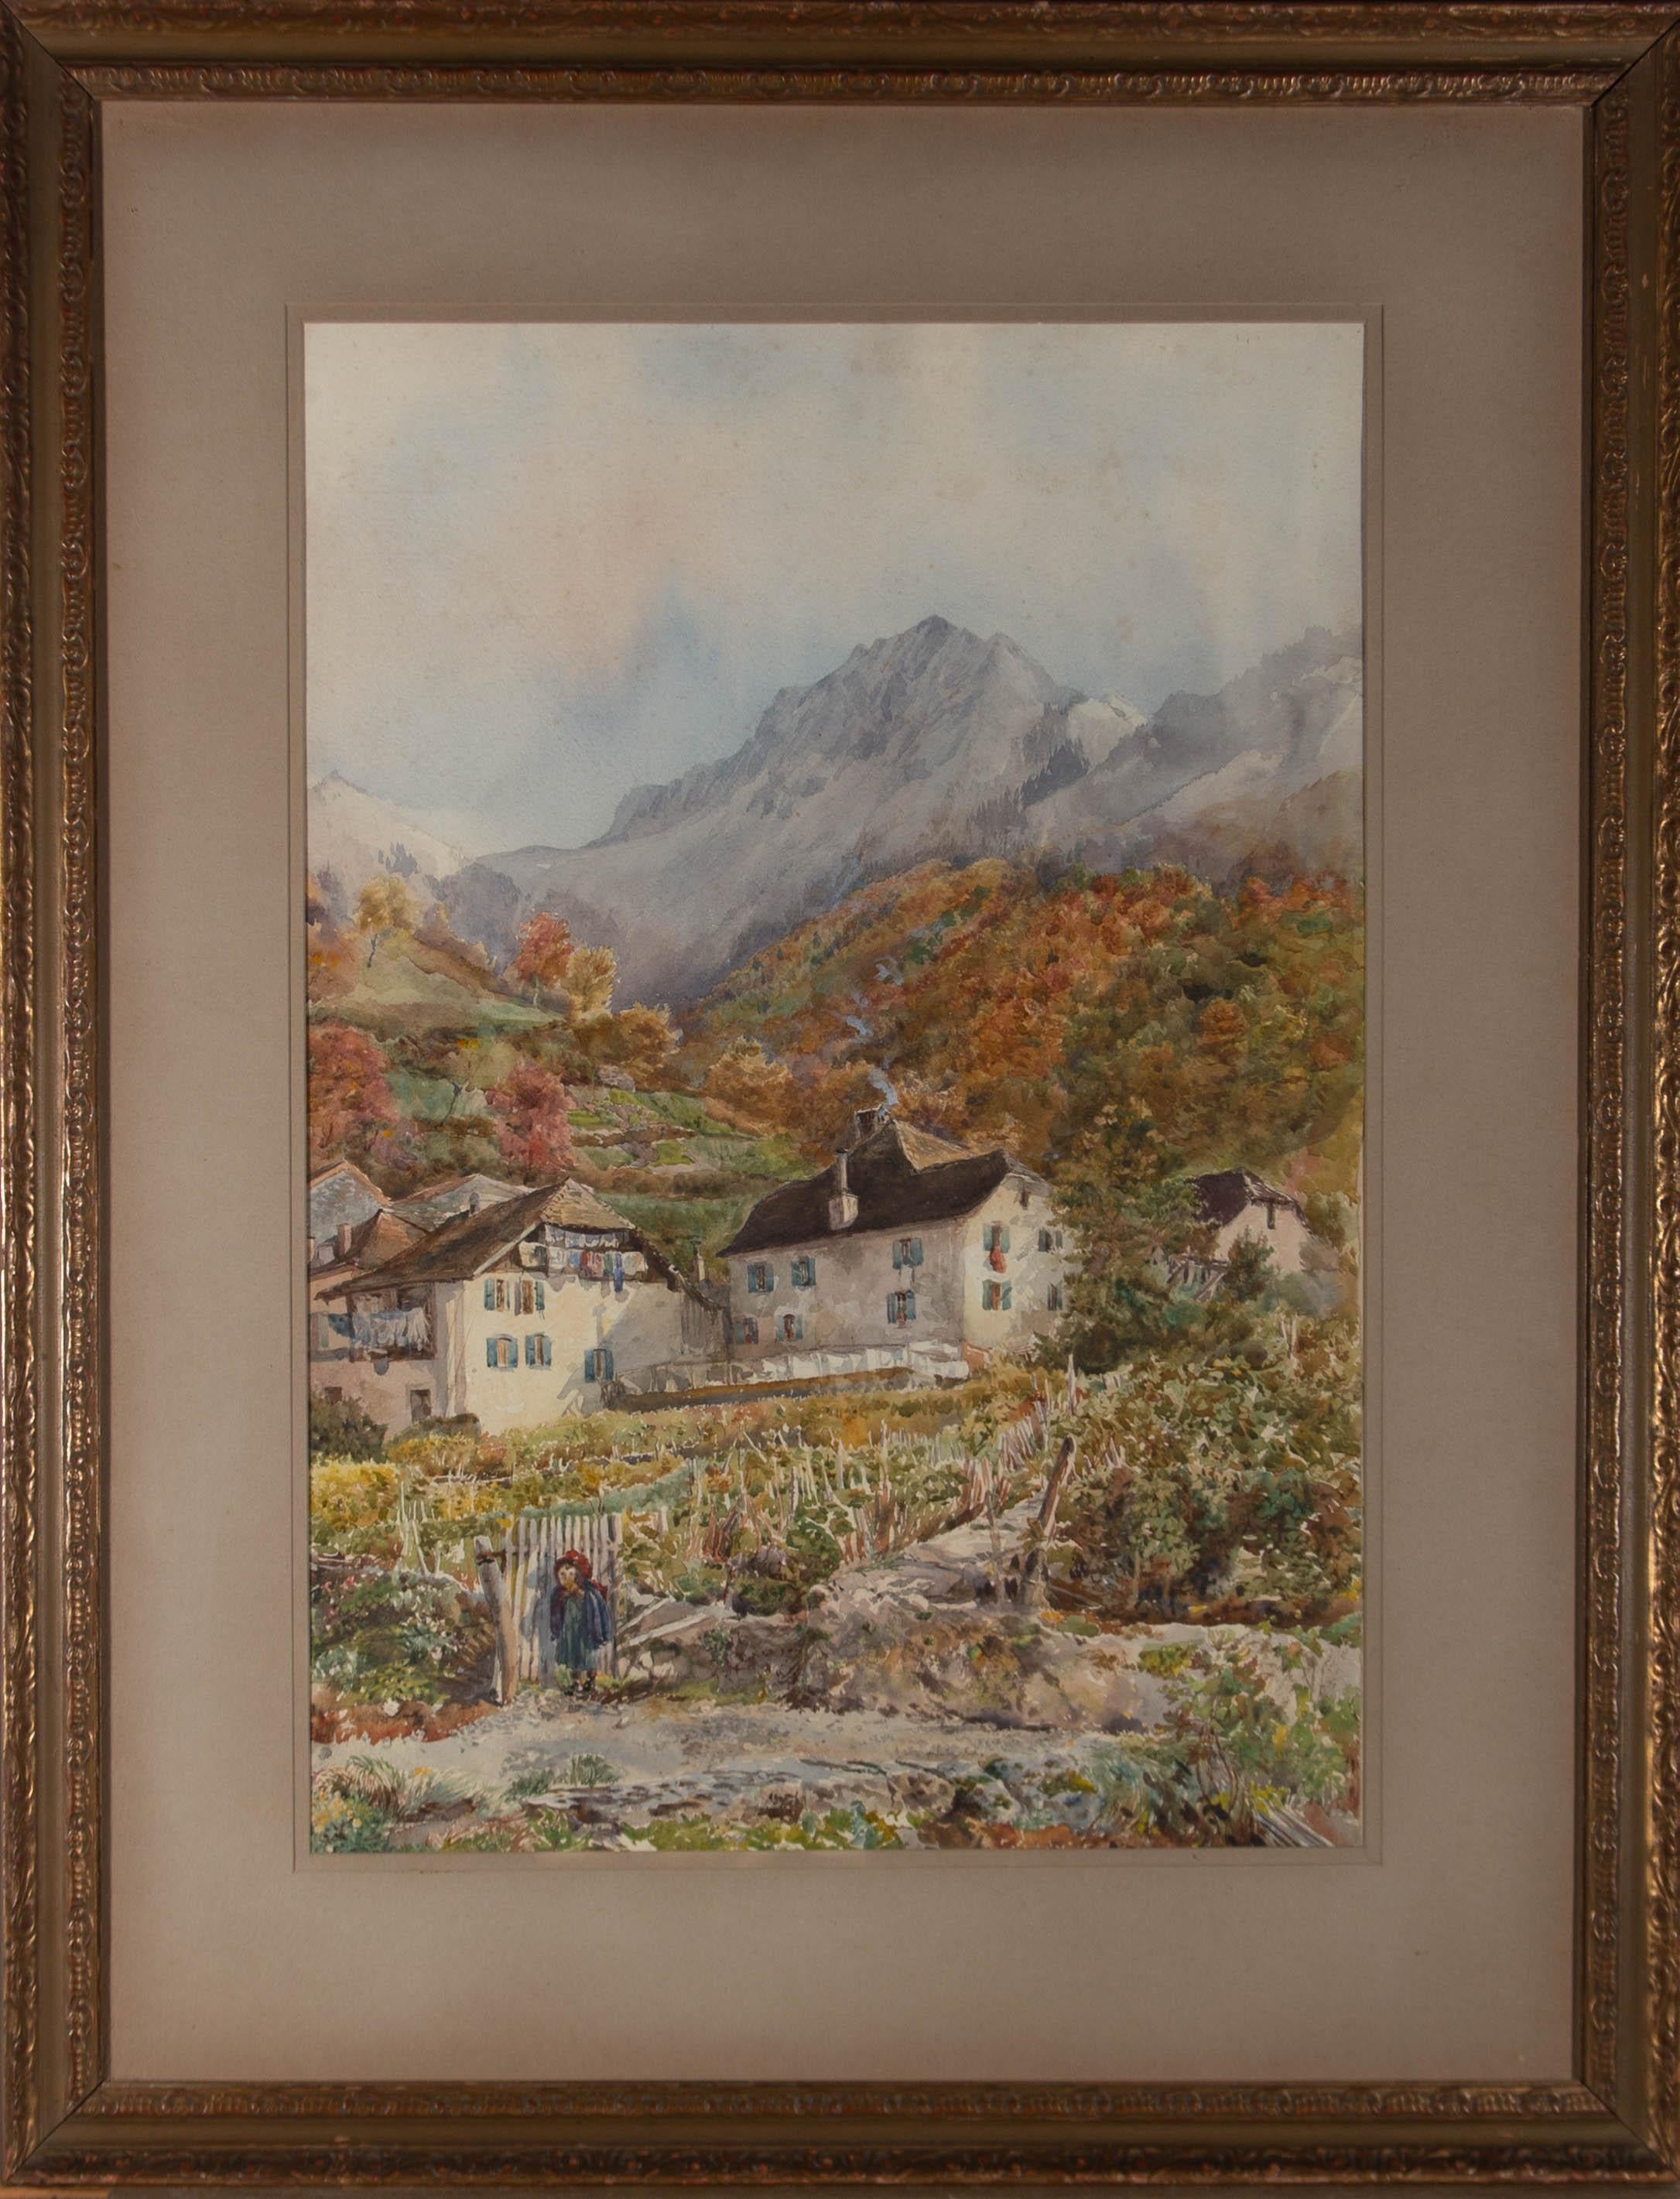 Unknown Landscape Art - Early 20th Century Watercolour - Mountain Hamlet